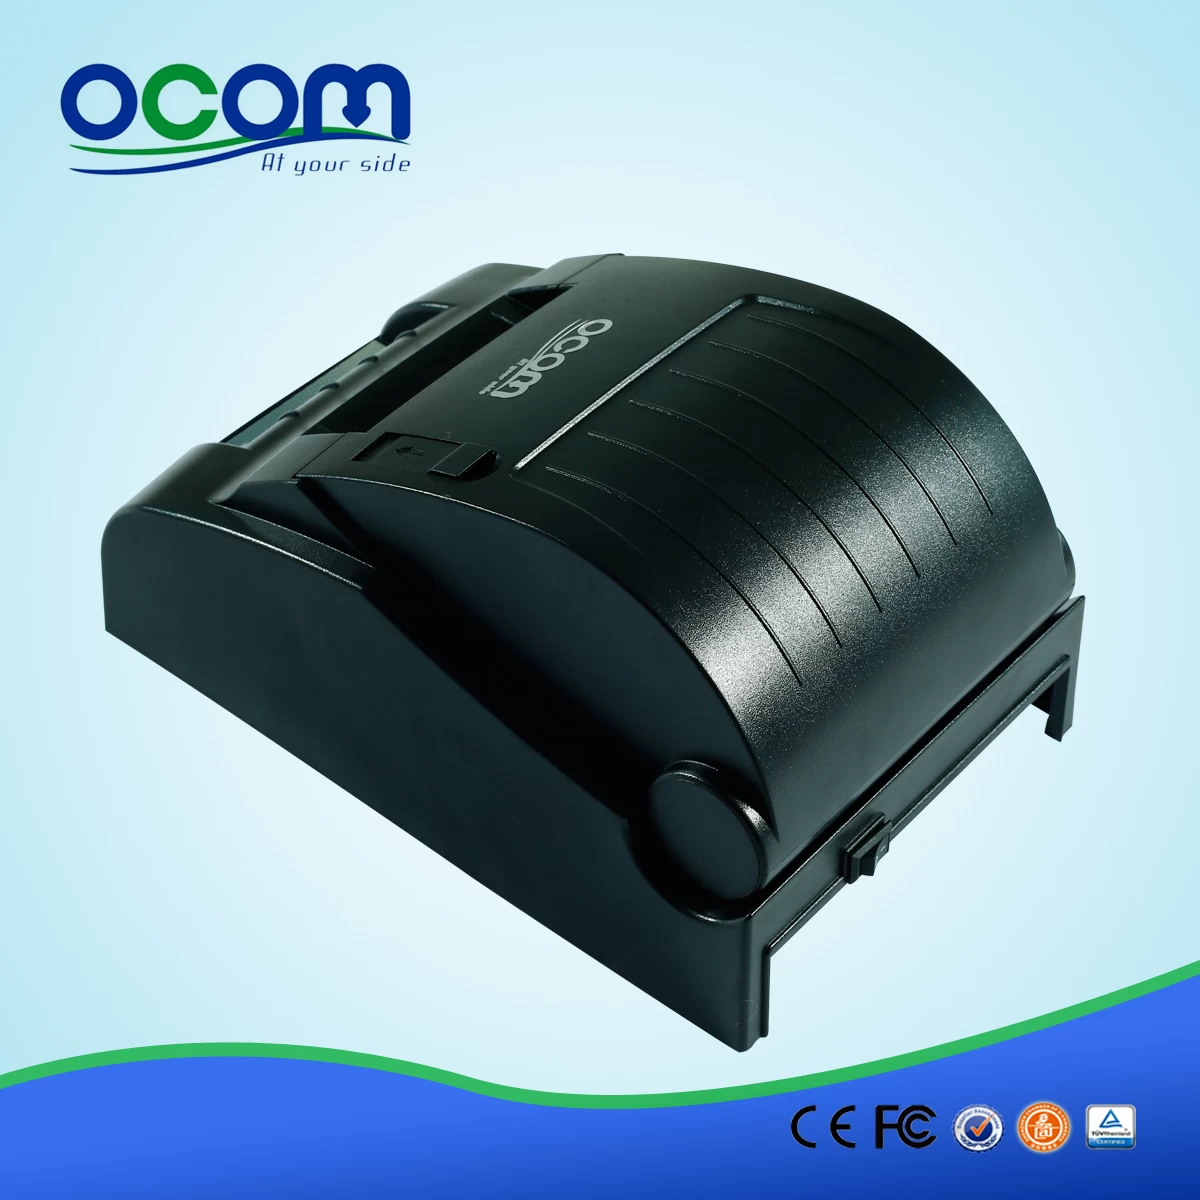 2 inch printer bill thermal Printer (OCPP-582)